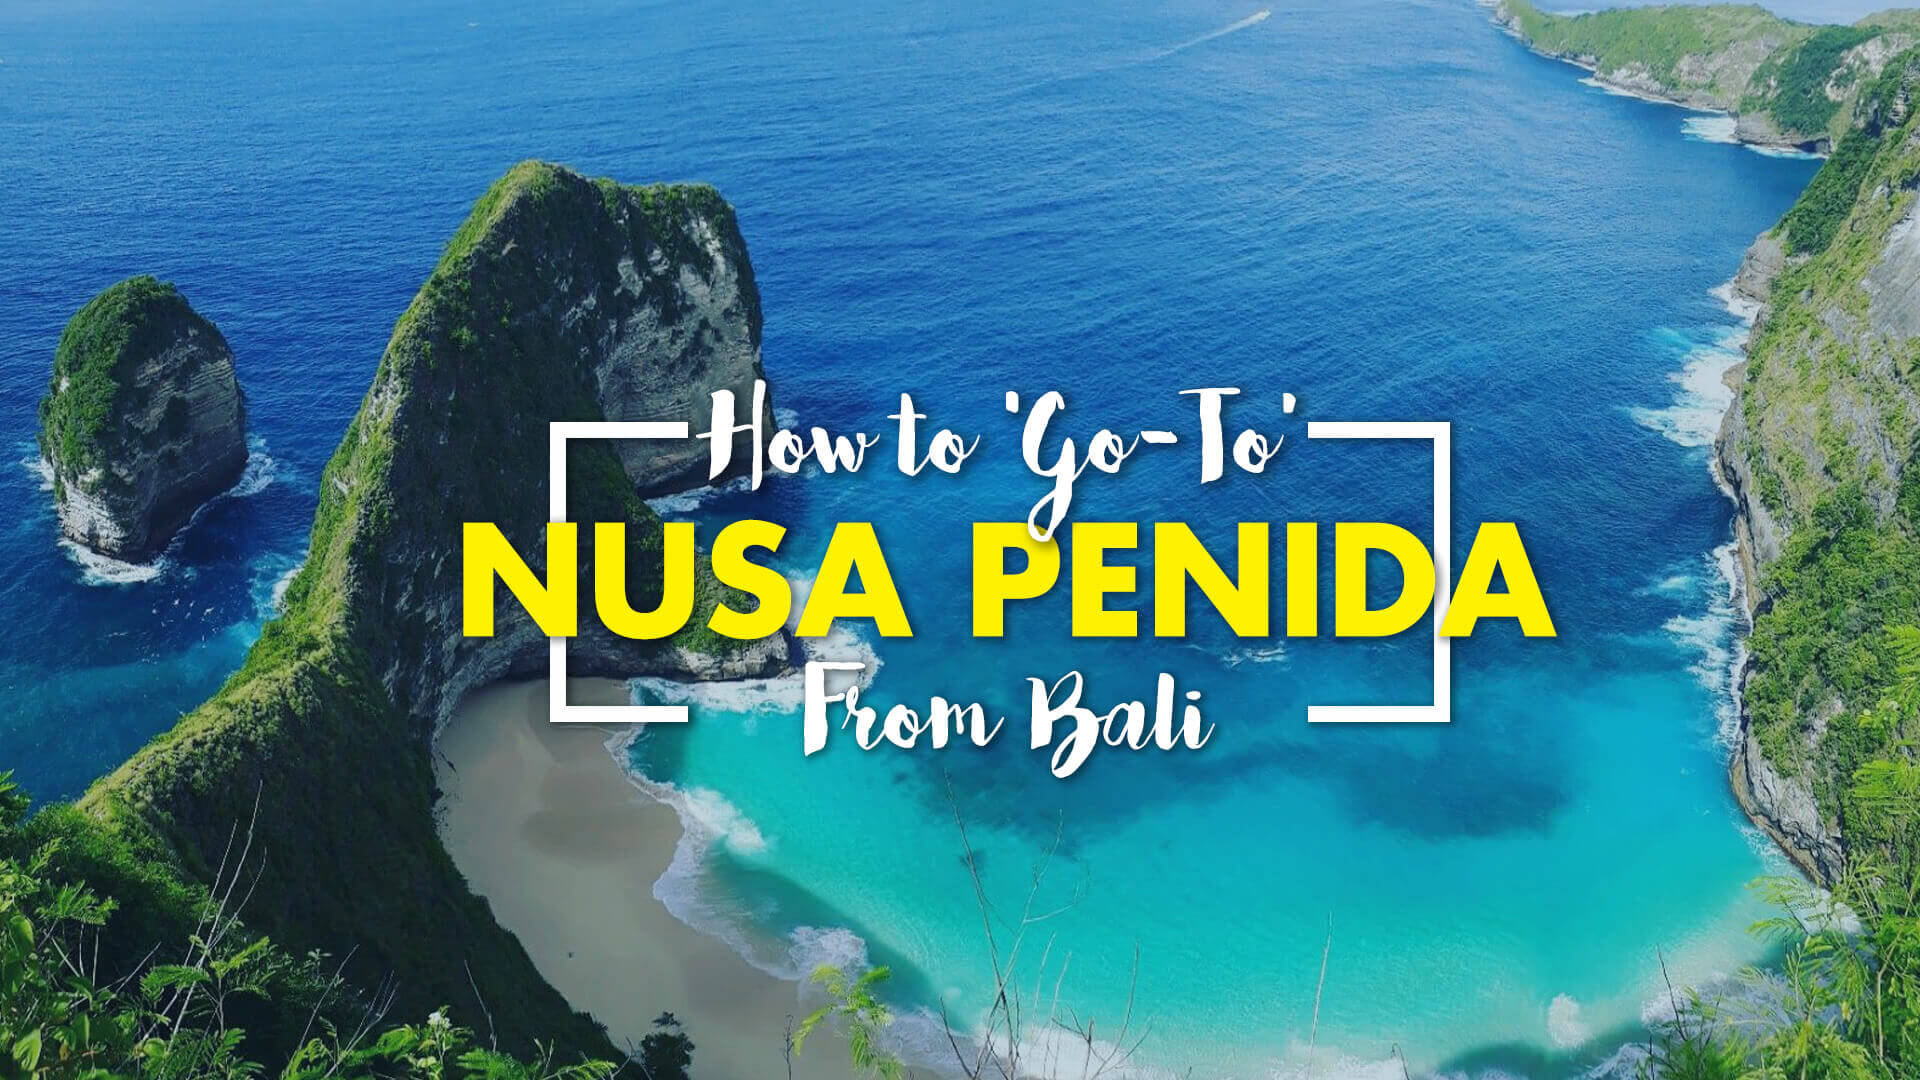 World Tour At Nusa Penida By Momotrip.co.id